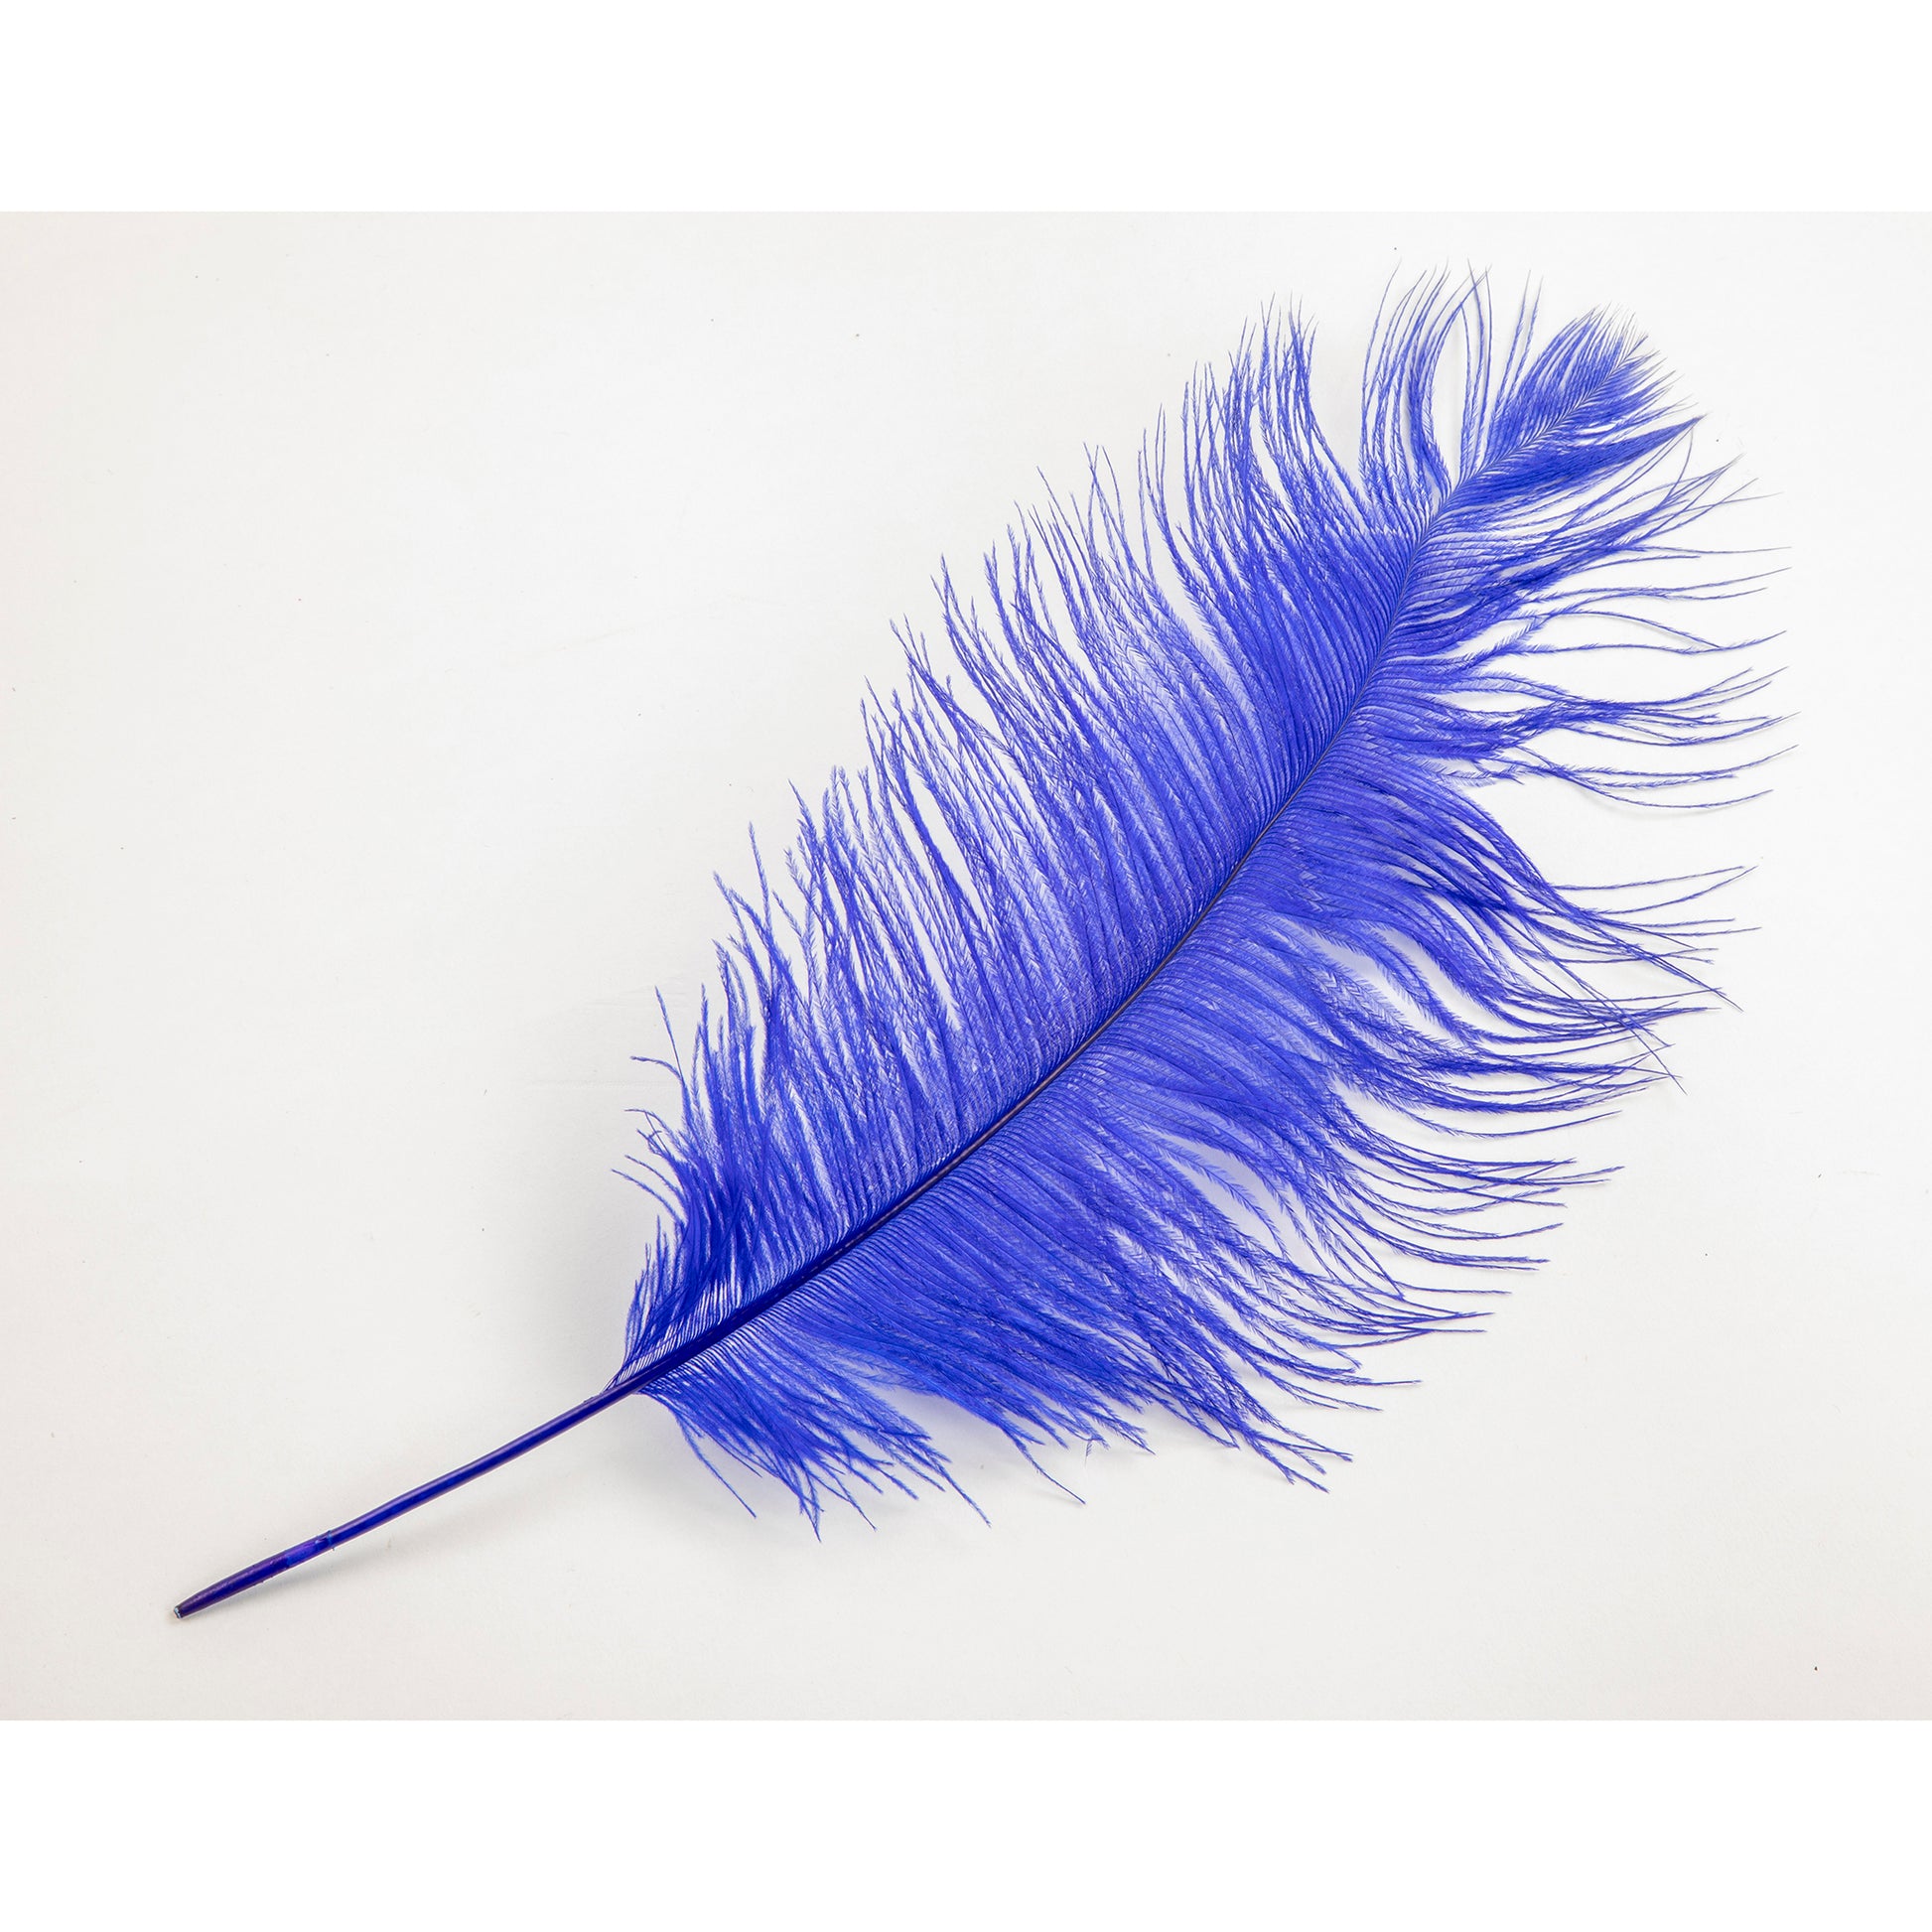 1/2 Lb. - 25-29 Royal Blue Large Ostrich Wing Plume Wholesale Feathers  (Bulk)